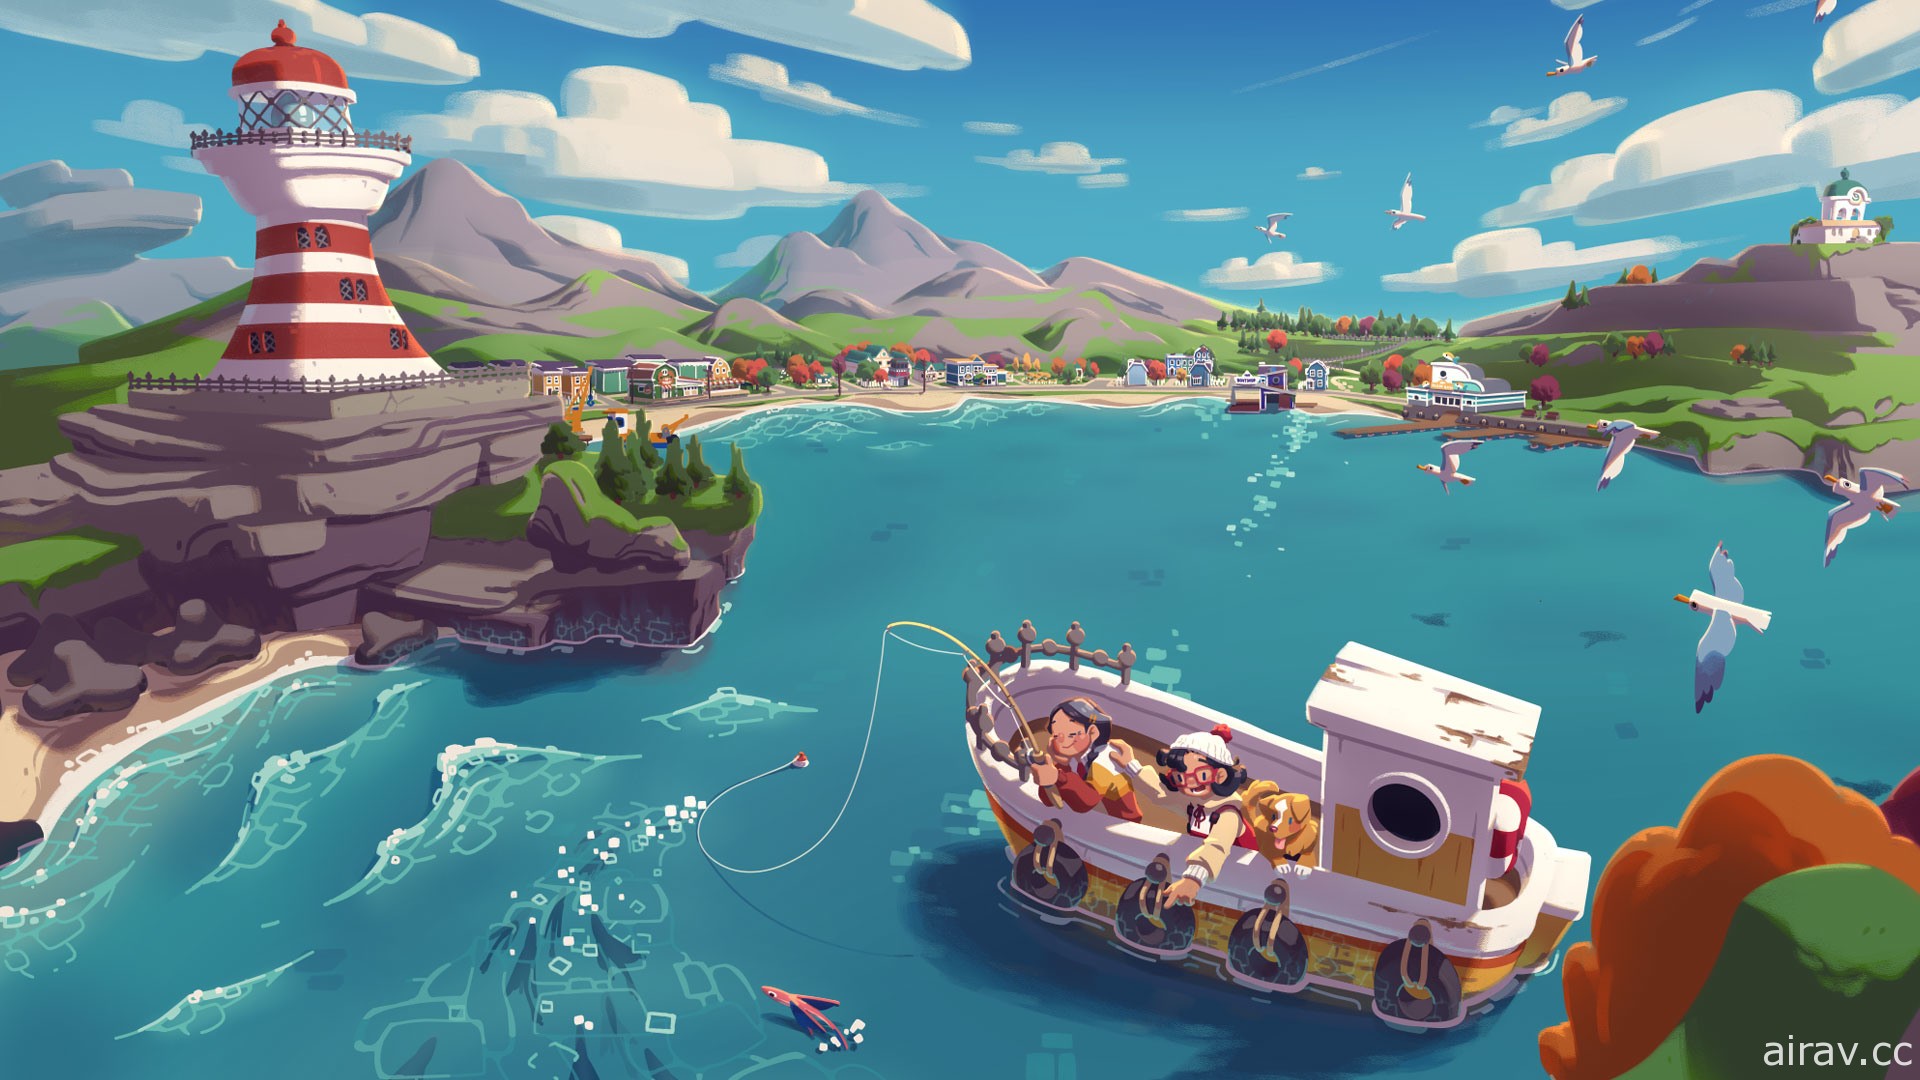 【GC 21】釣魚題材休閒冒險遊戲《月朧灣 Moonglow Bay》將於 10 月 7 日上市